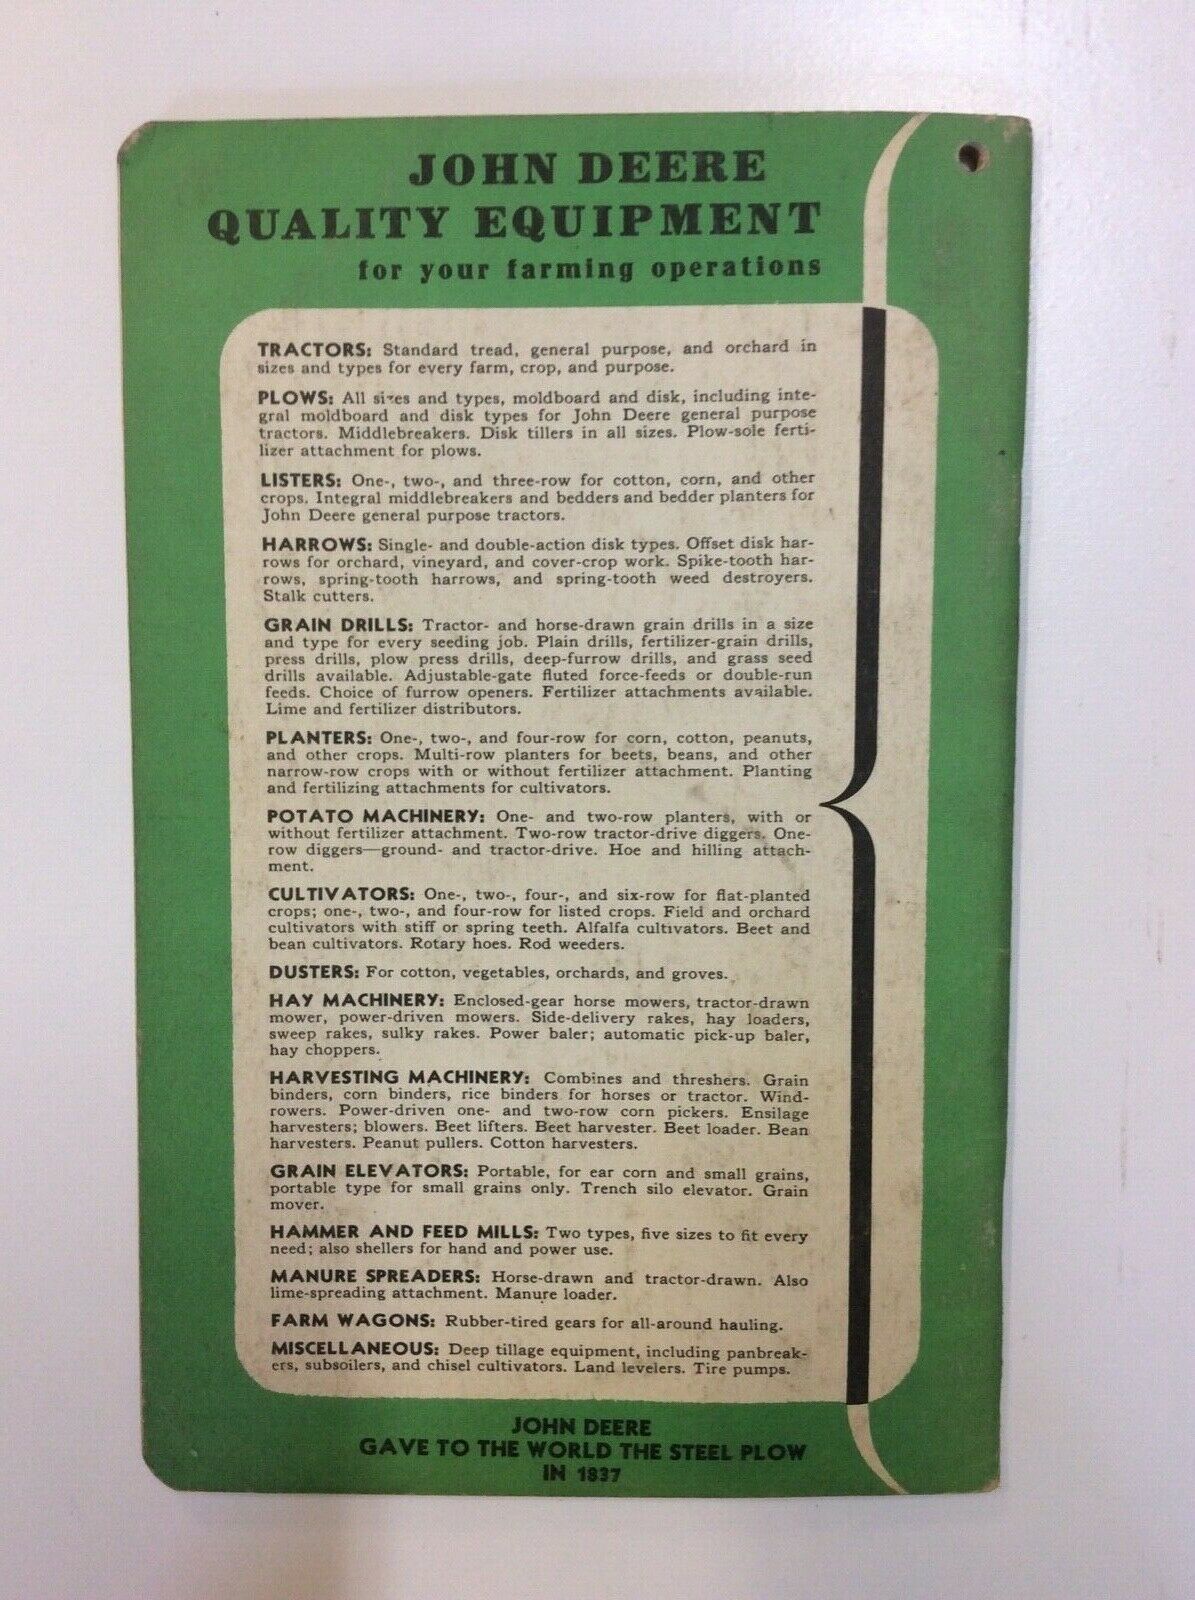 OMC20649 John Deere Operators Manual For Steel Portable Hay And Grain Elevator